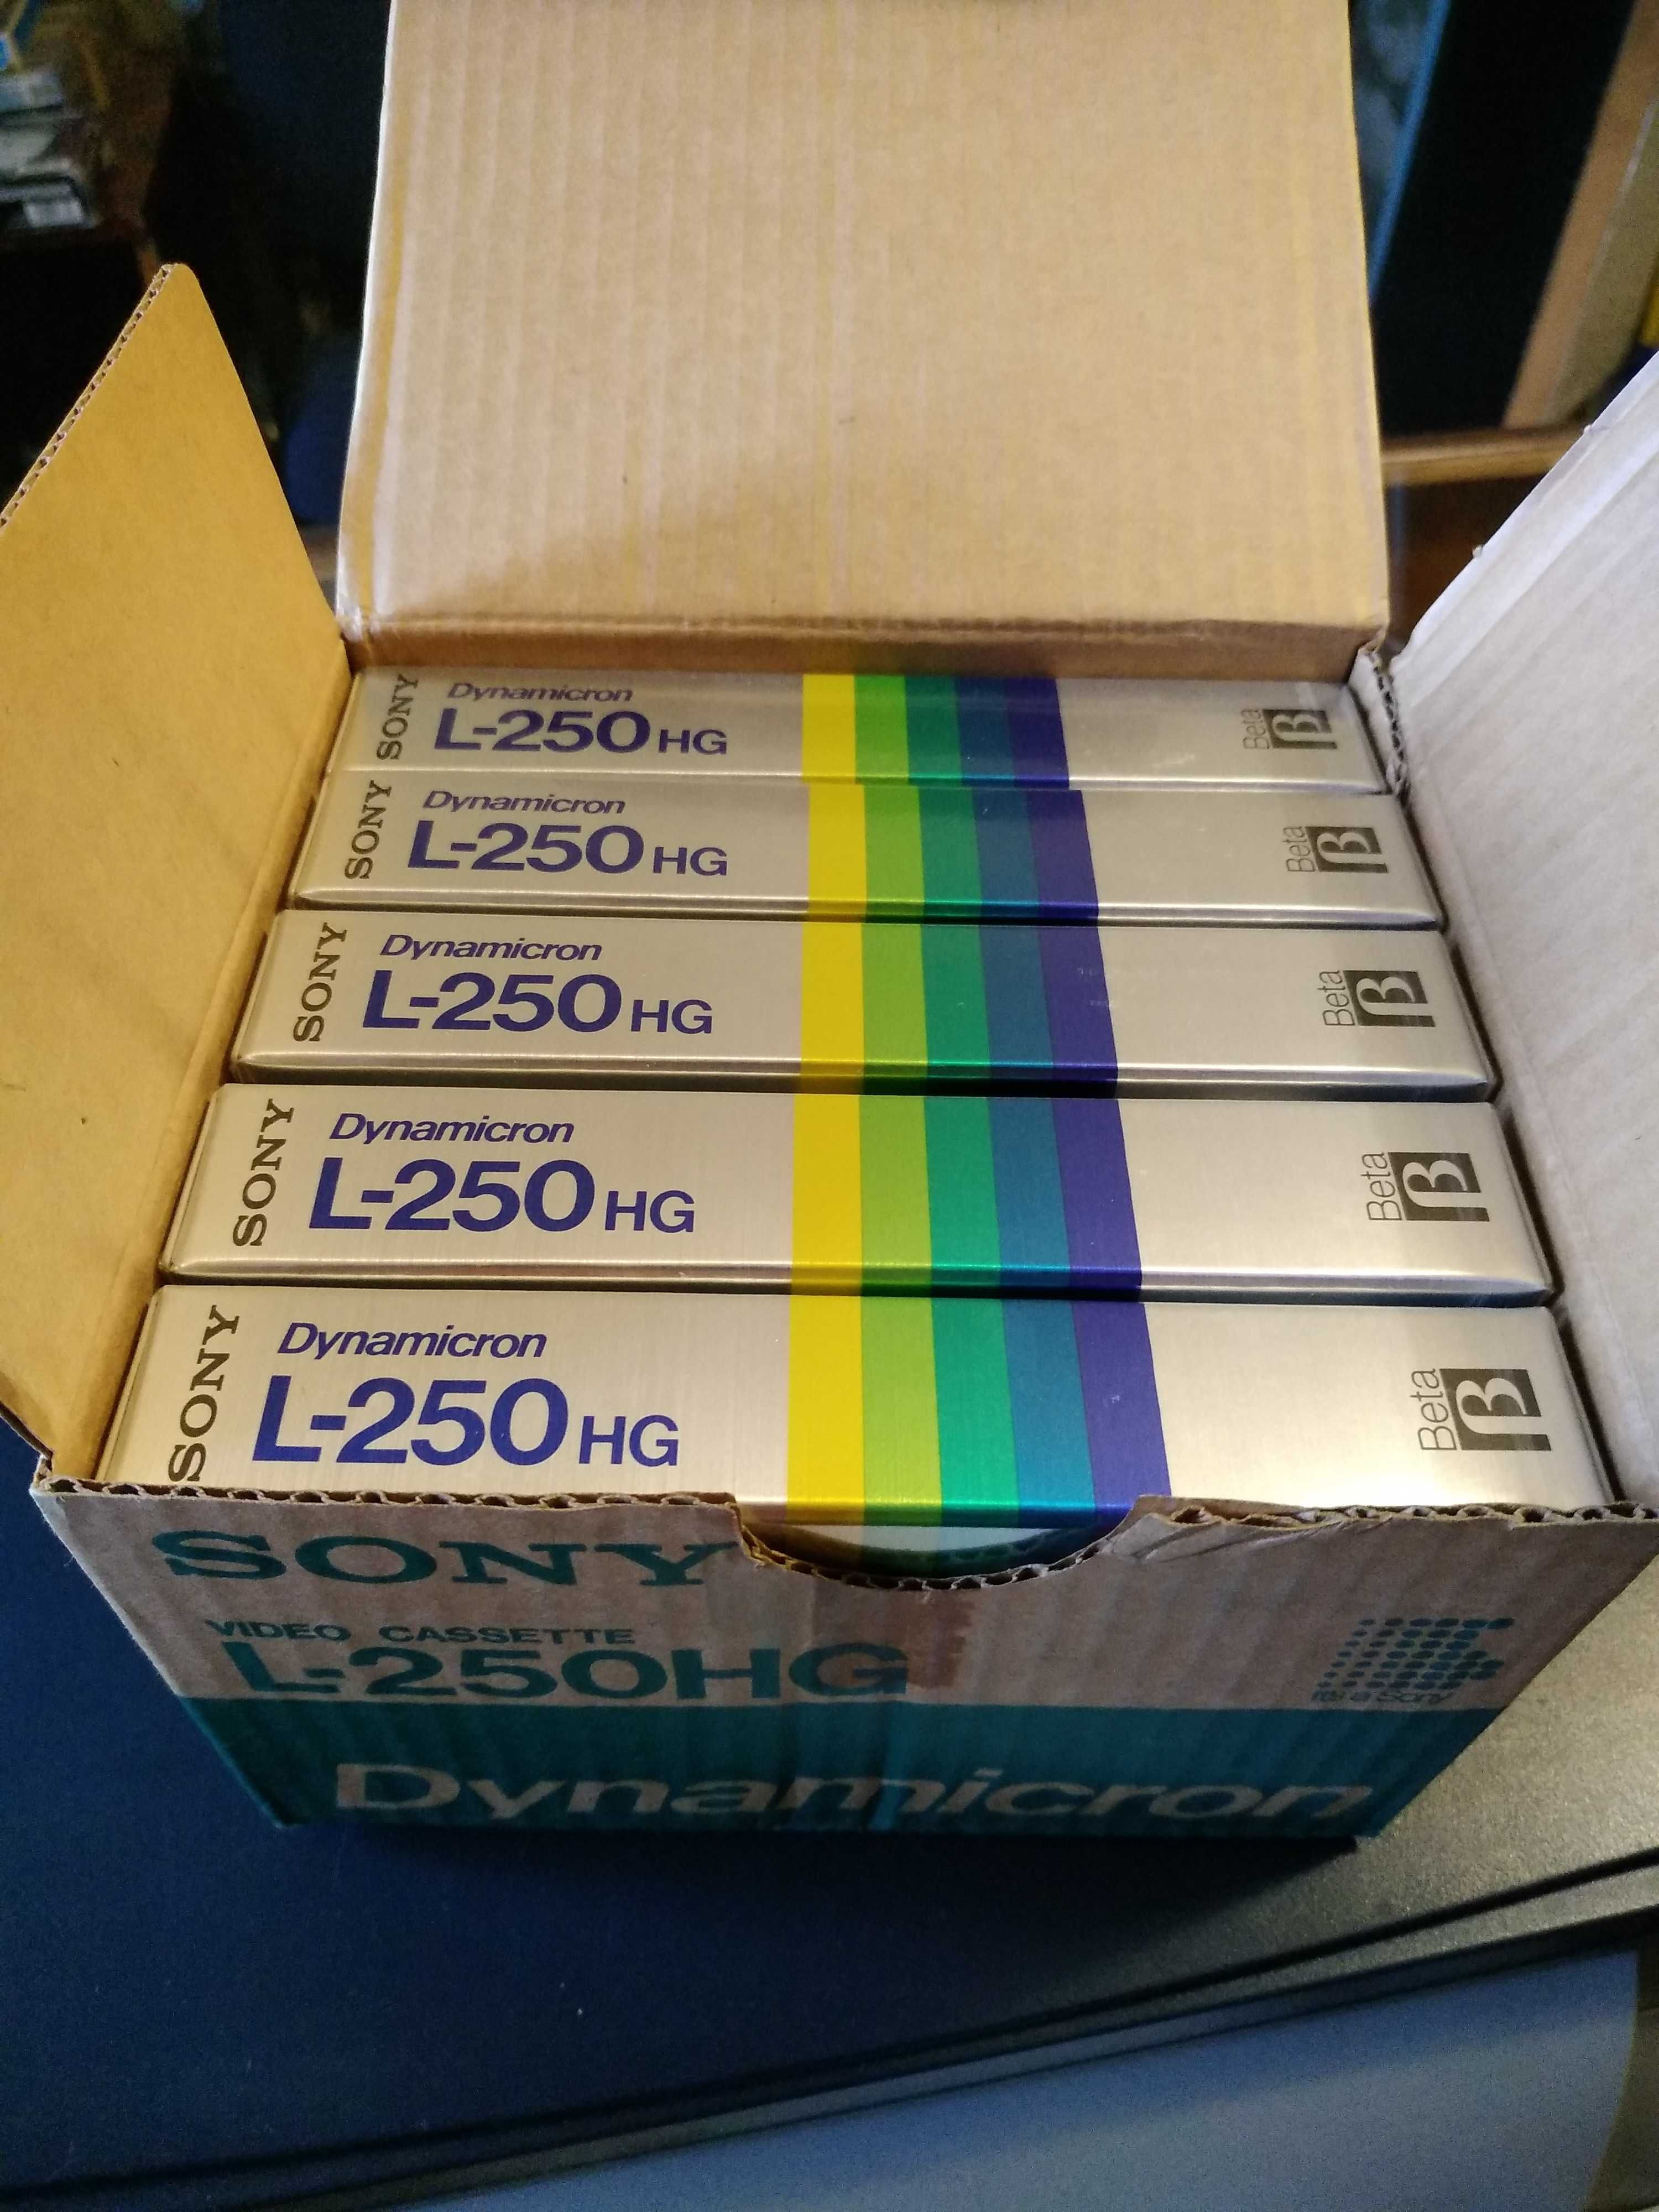 Видеокассеты формата BETAMAX:
- Sony Dynamicron L-250/830 NG